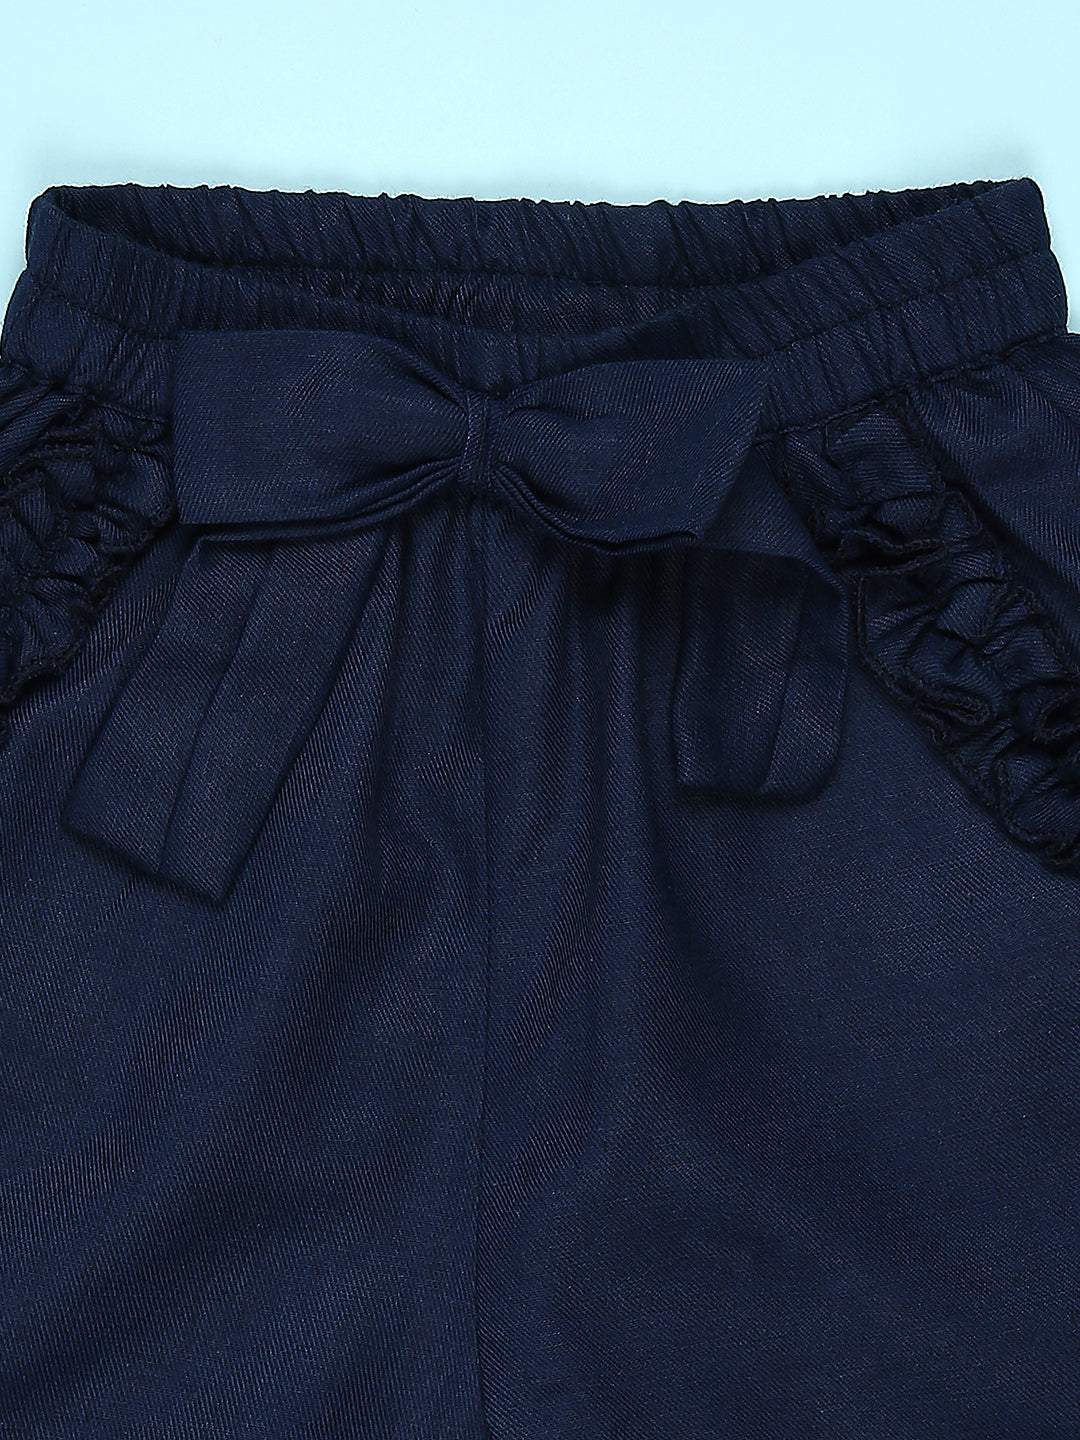 Cutiekins Girls Solid Embellished Big Bow Short -Navy Blue